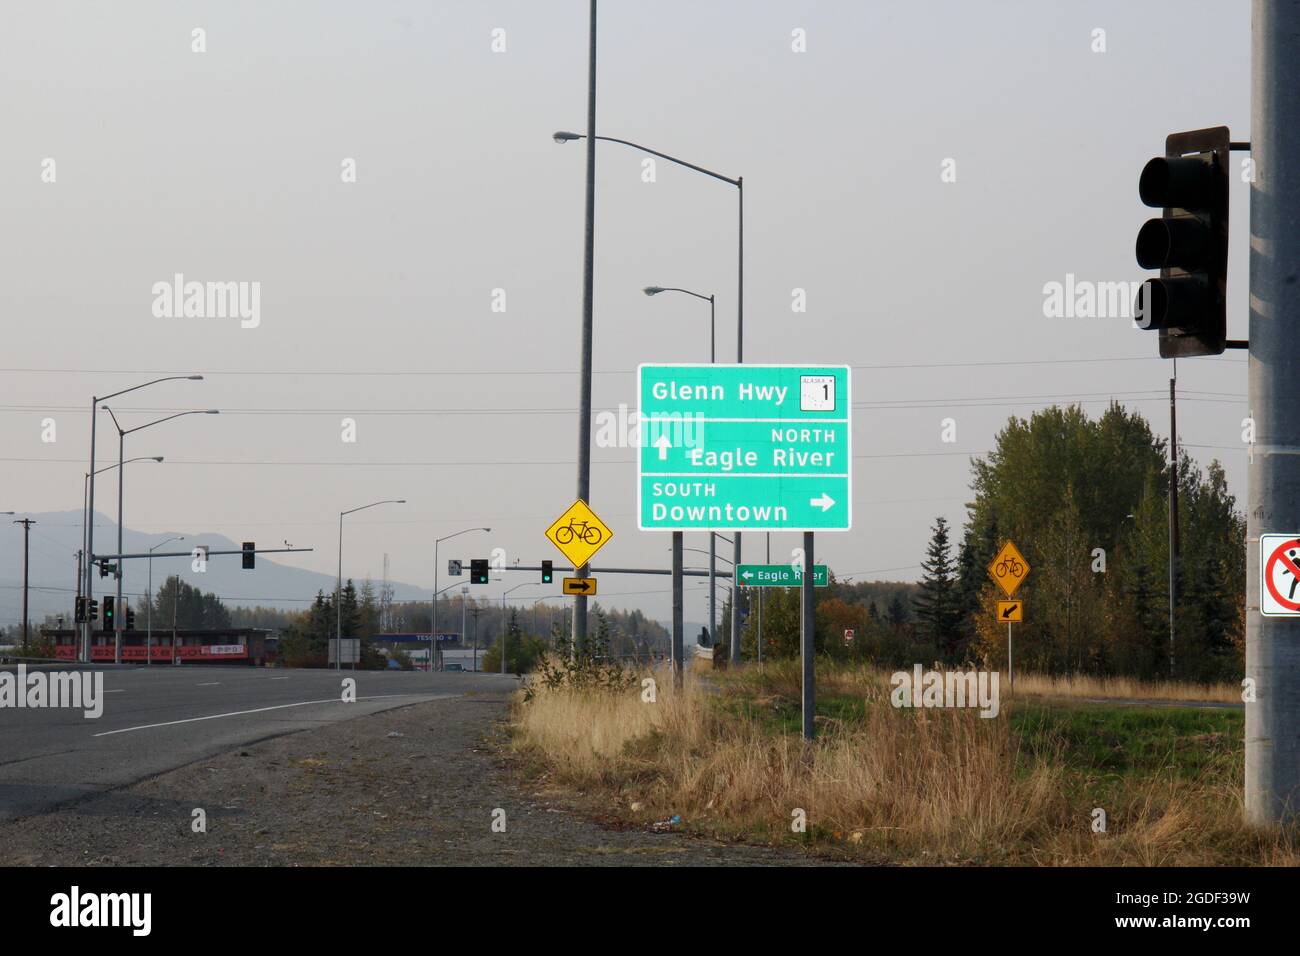 Glenn Highway 1 in Alaska, USA Stock Photo